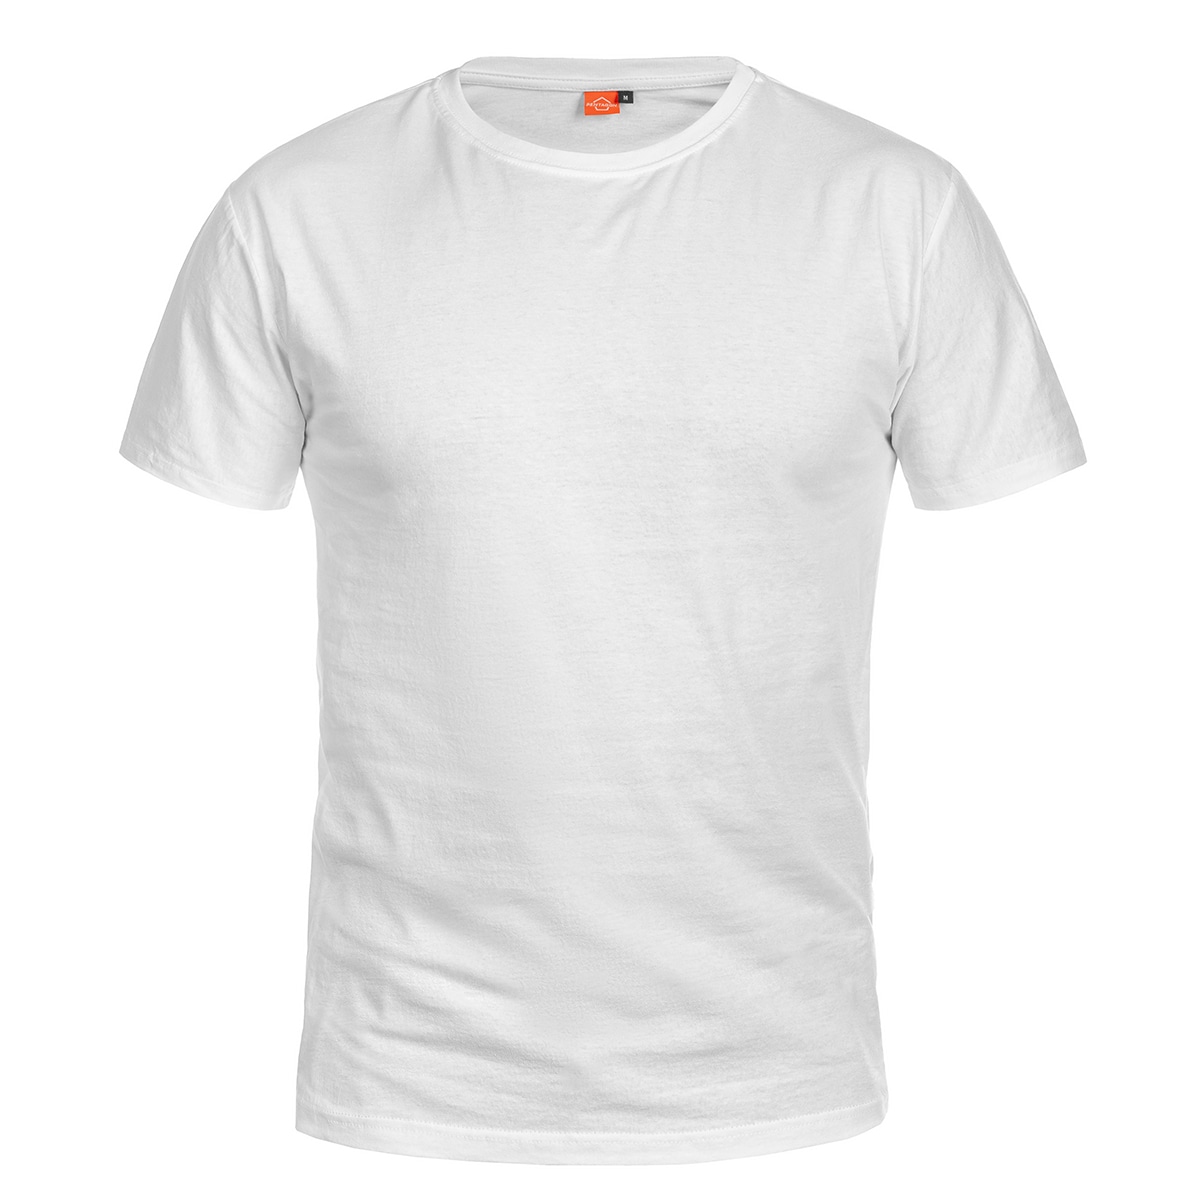 Koszulki T-Shirt Pentagon Orpheus Black White Midnight Blue – 3 szt.